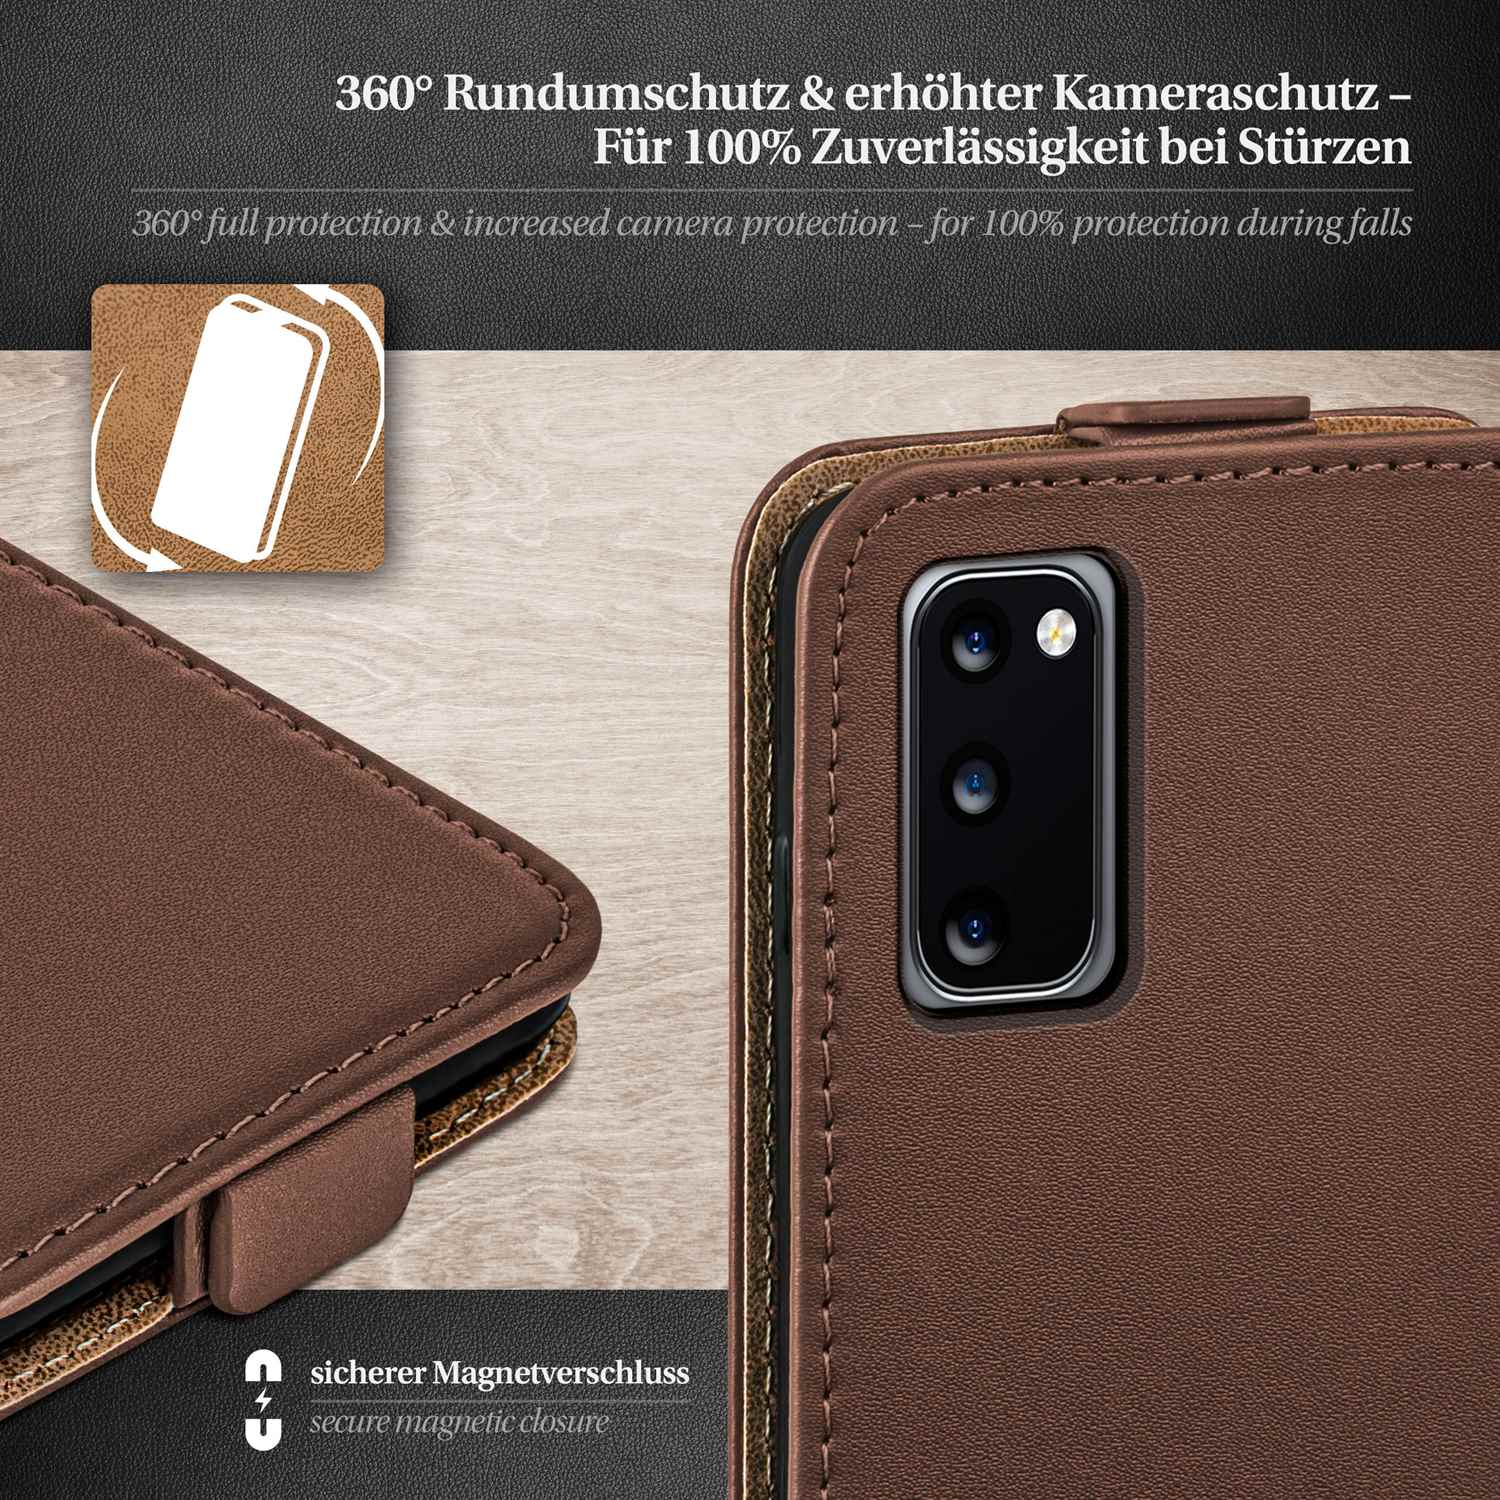 Oxide-Brown Galaxy Cover, Flip Flip S20 MOEX 5G, Samsung, Case,